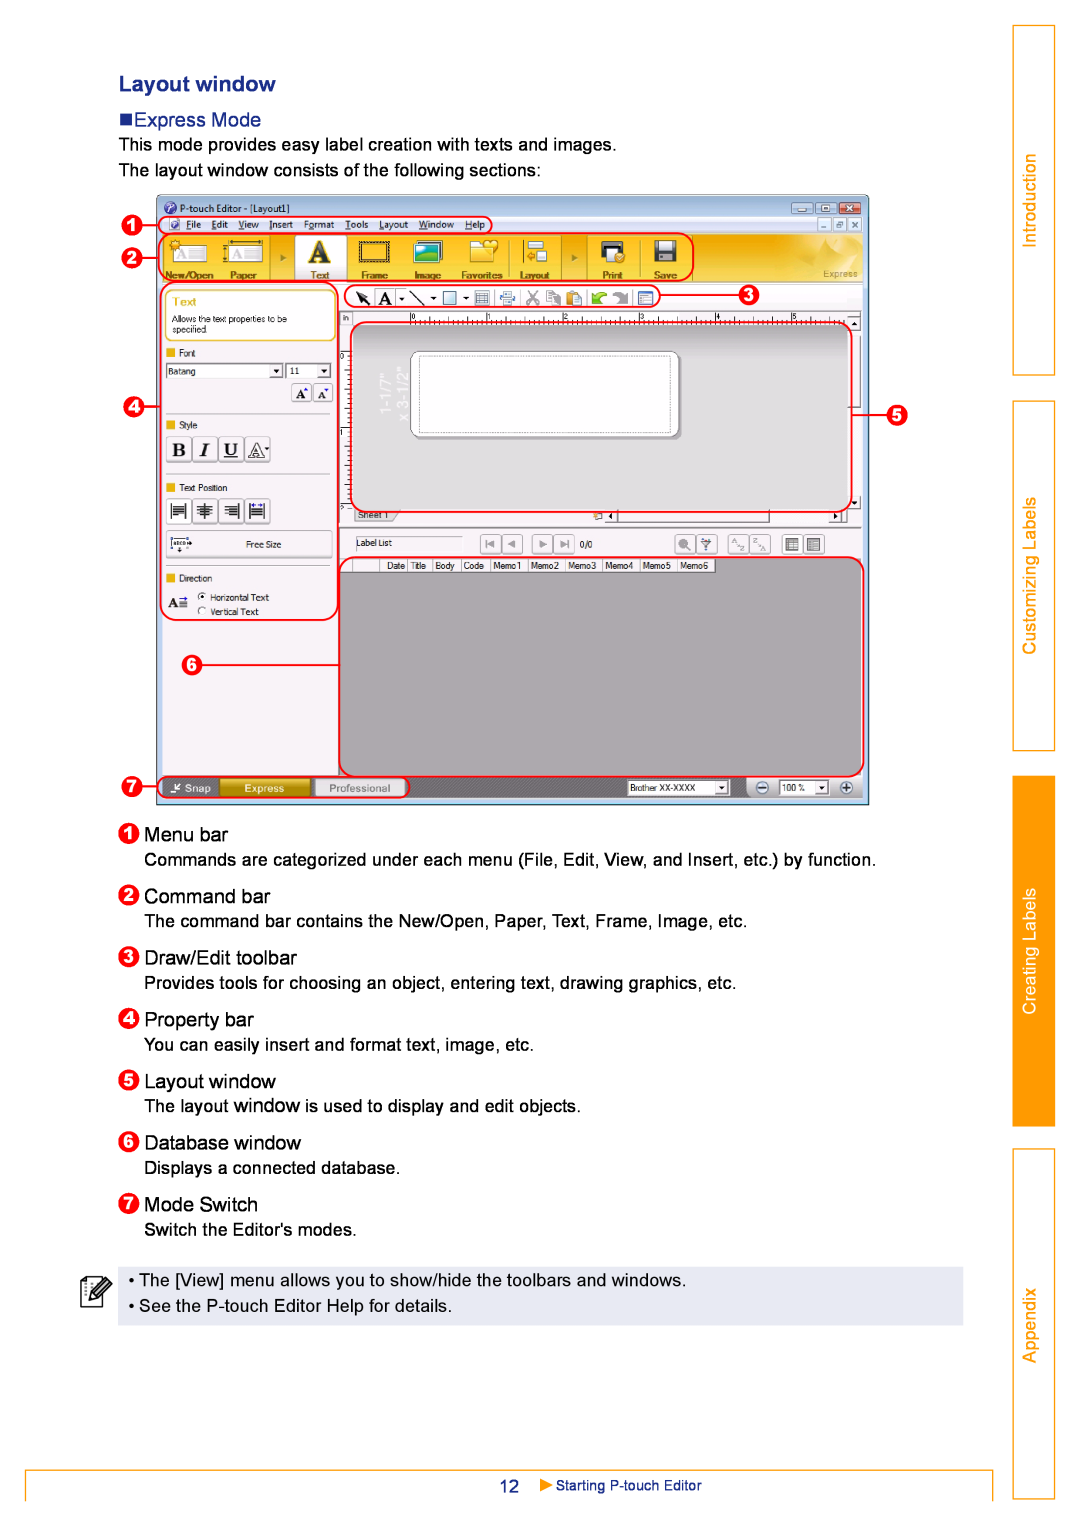 Brother TD-4000 Layout window, „Express Mode, Menu bar, Command bar, Draw/Edit toolbar, Property bar, Database window 